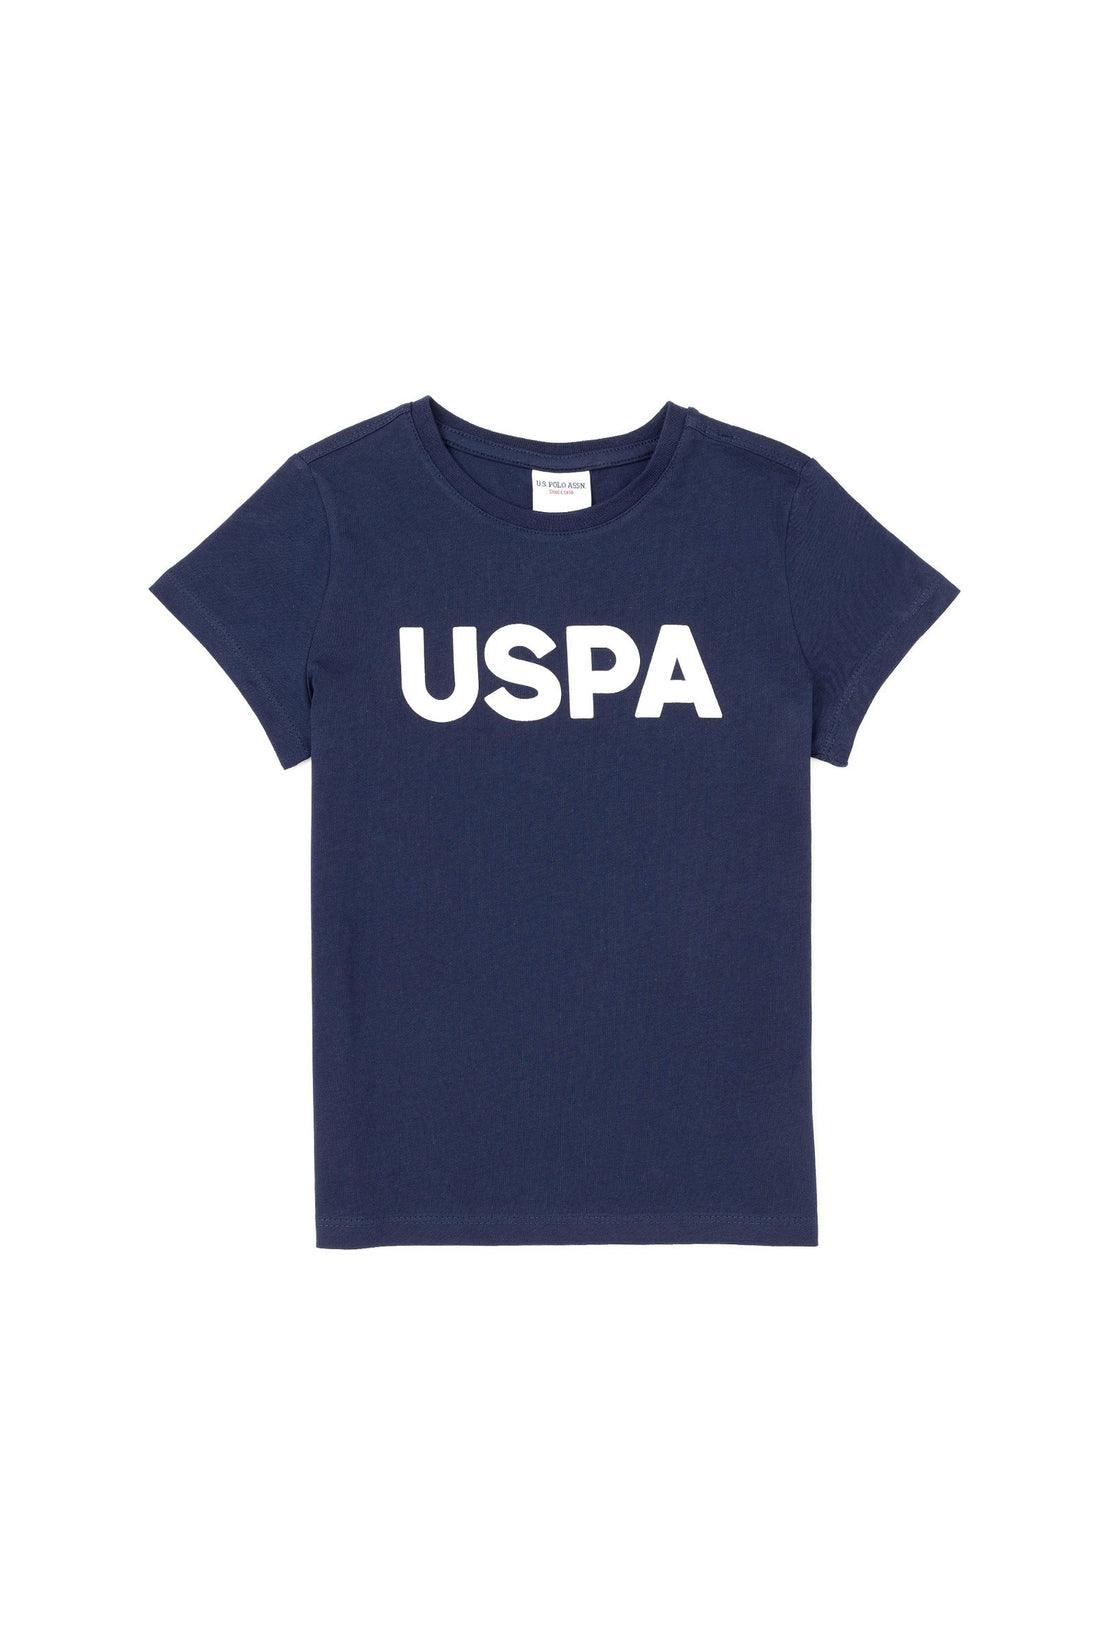 Round Neck T-Shirt With Uspa Logo_G083SZ0110 1795027_VR033_01